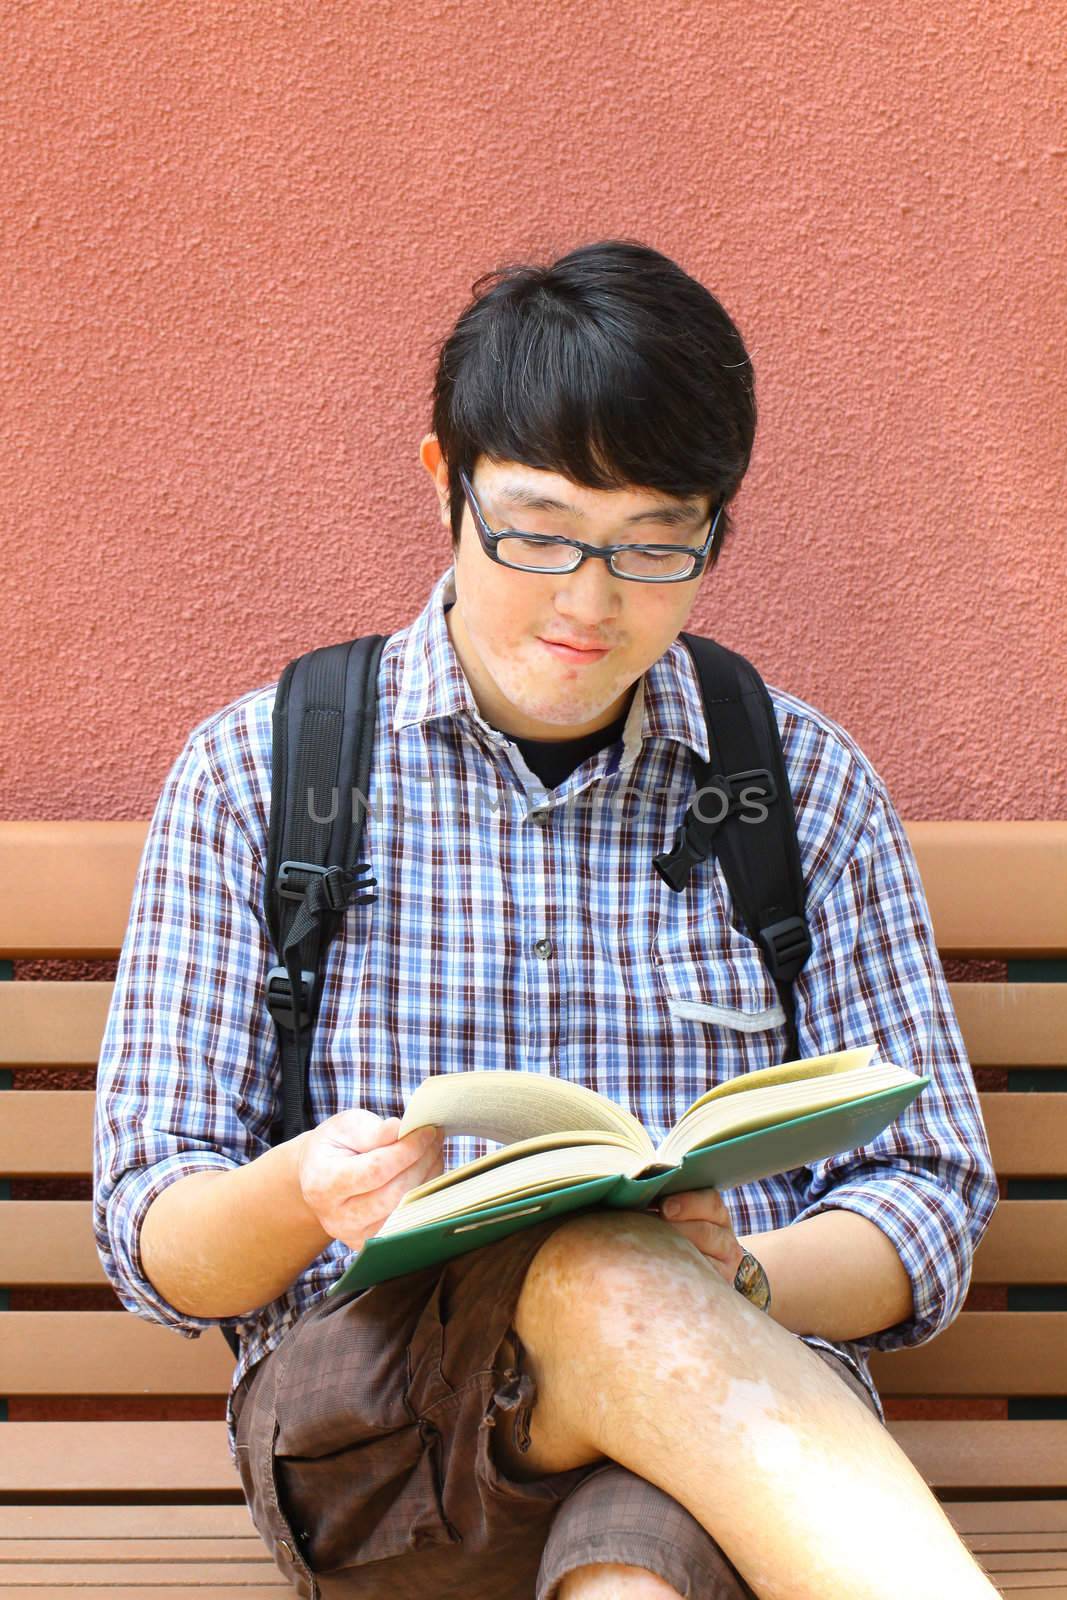 Asian university student boy by kawing921